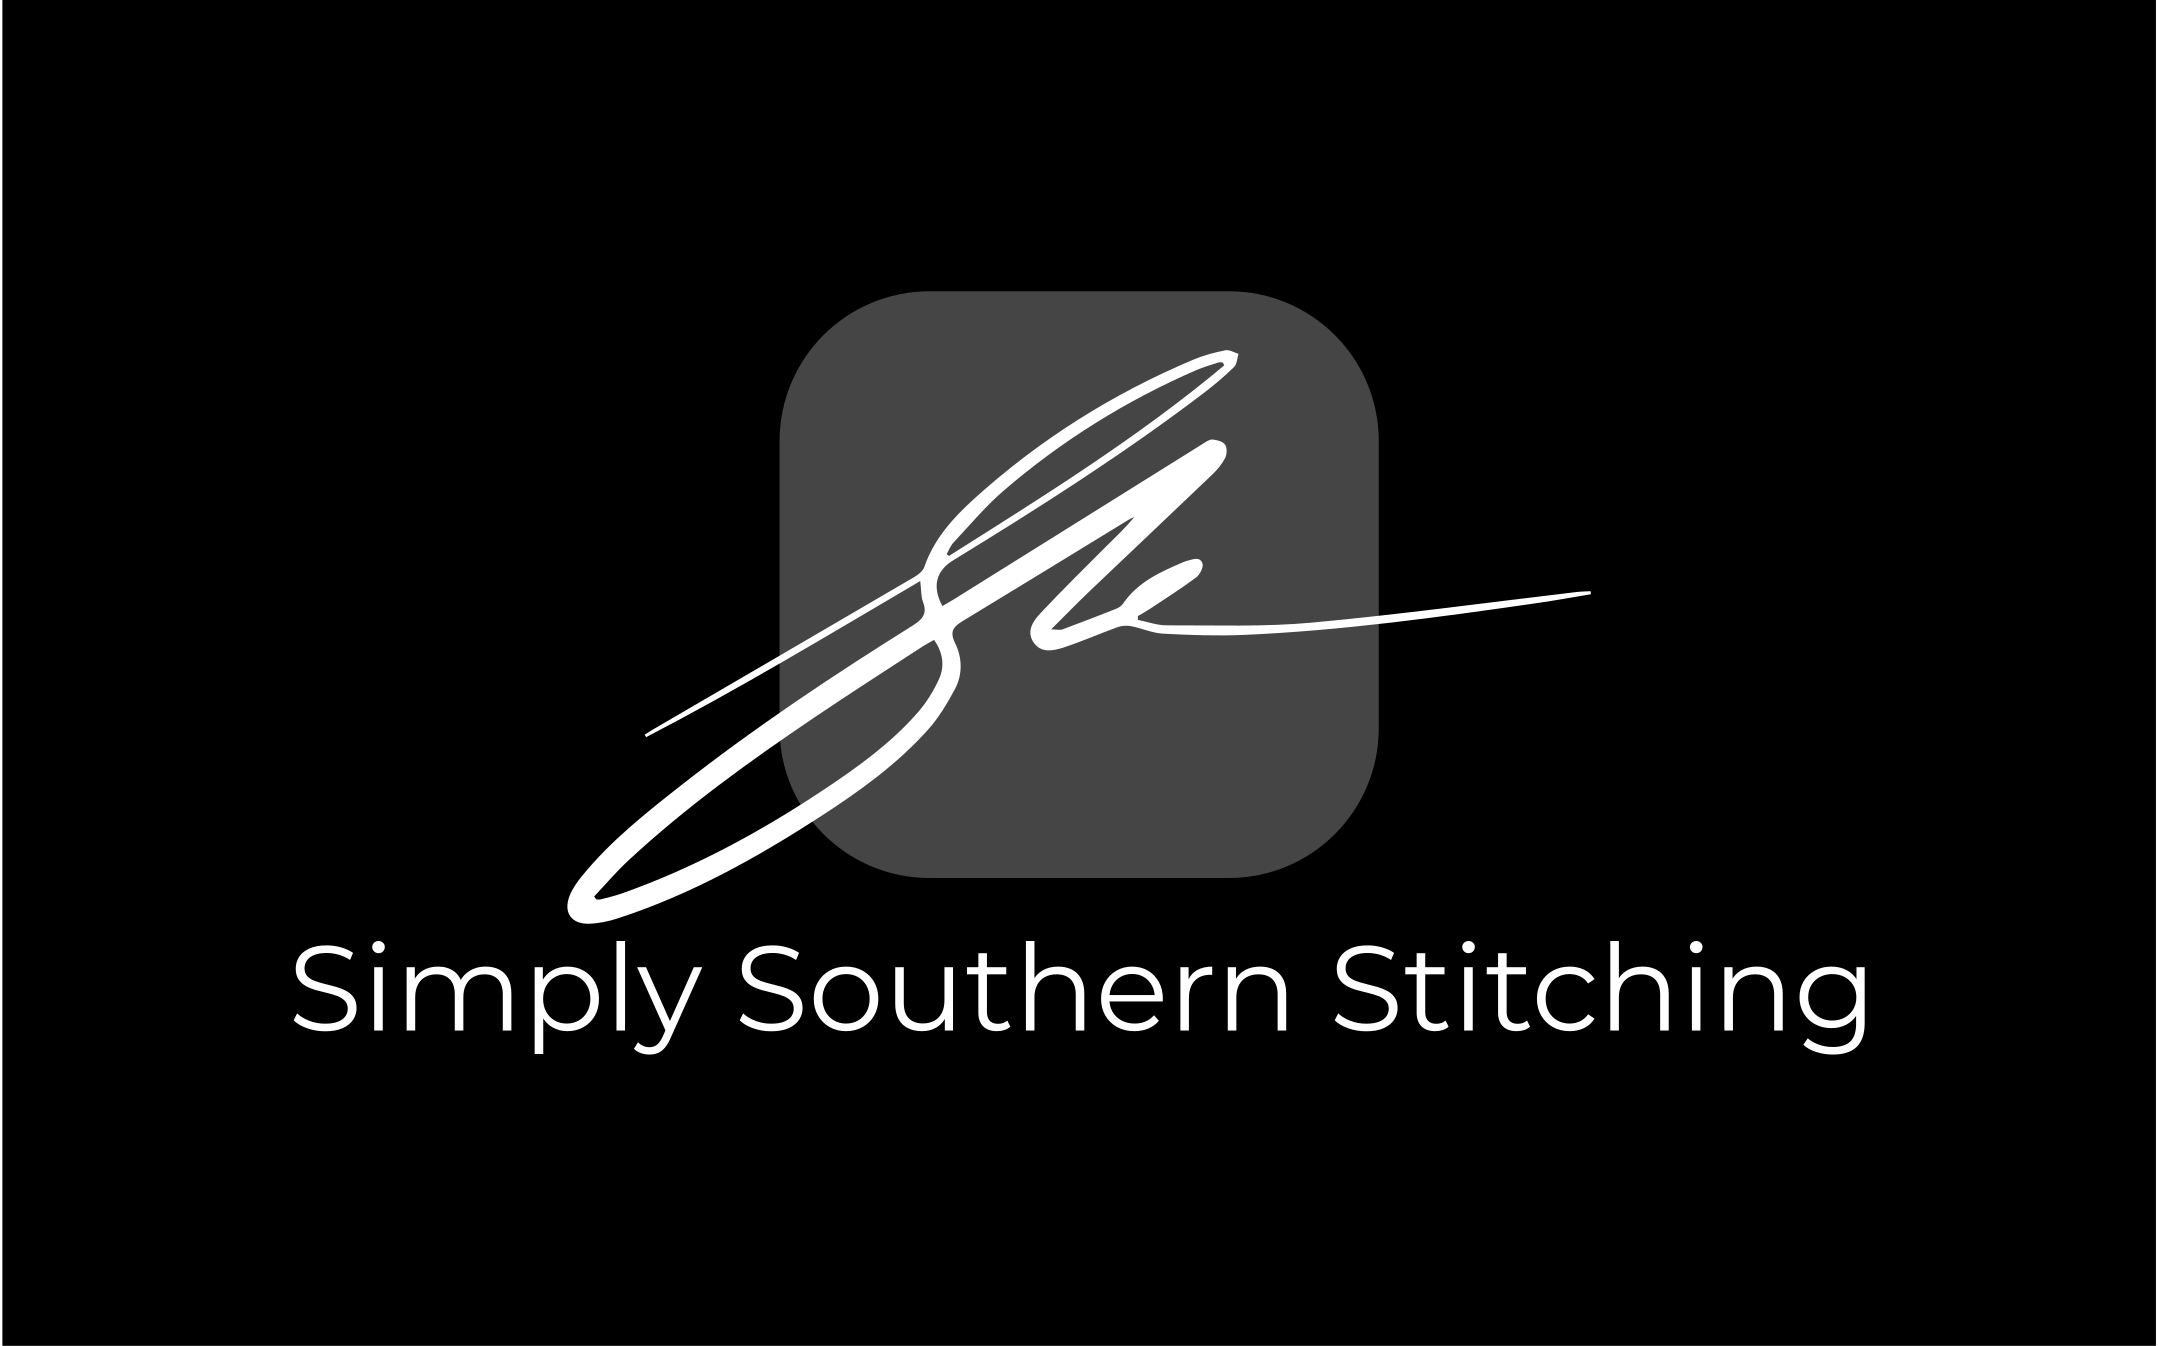 Simply Southern Stitching